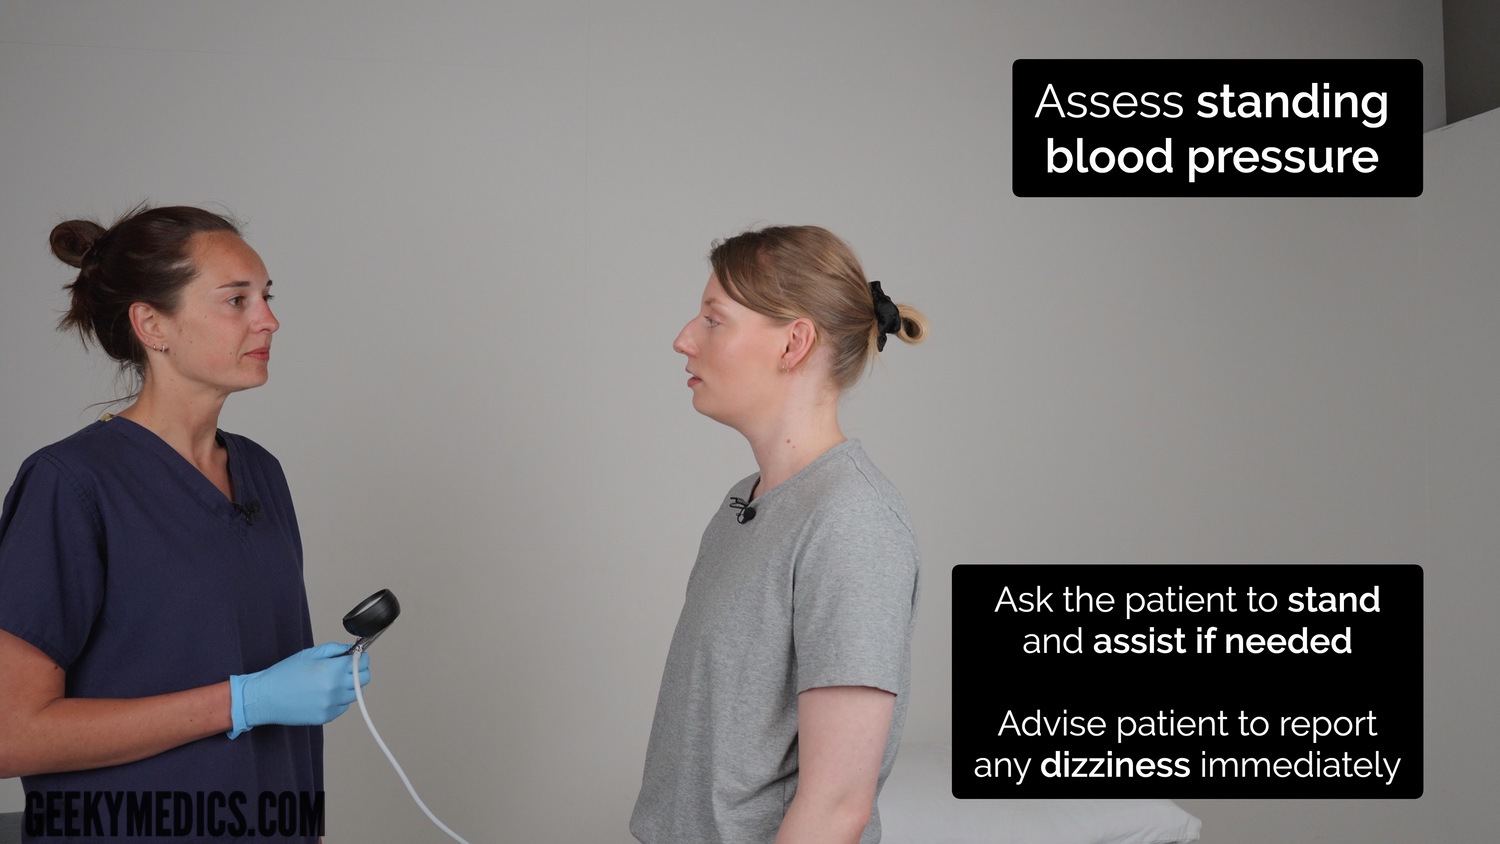 Teaching Chris How to Take a Manual Blood Pressure